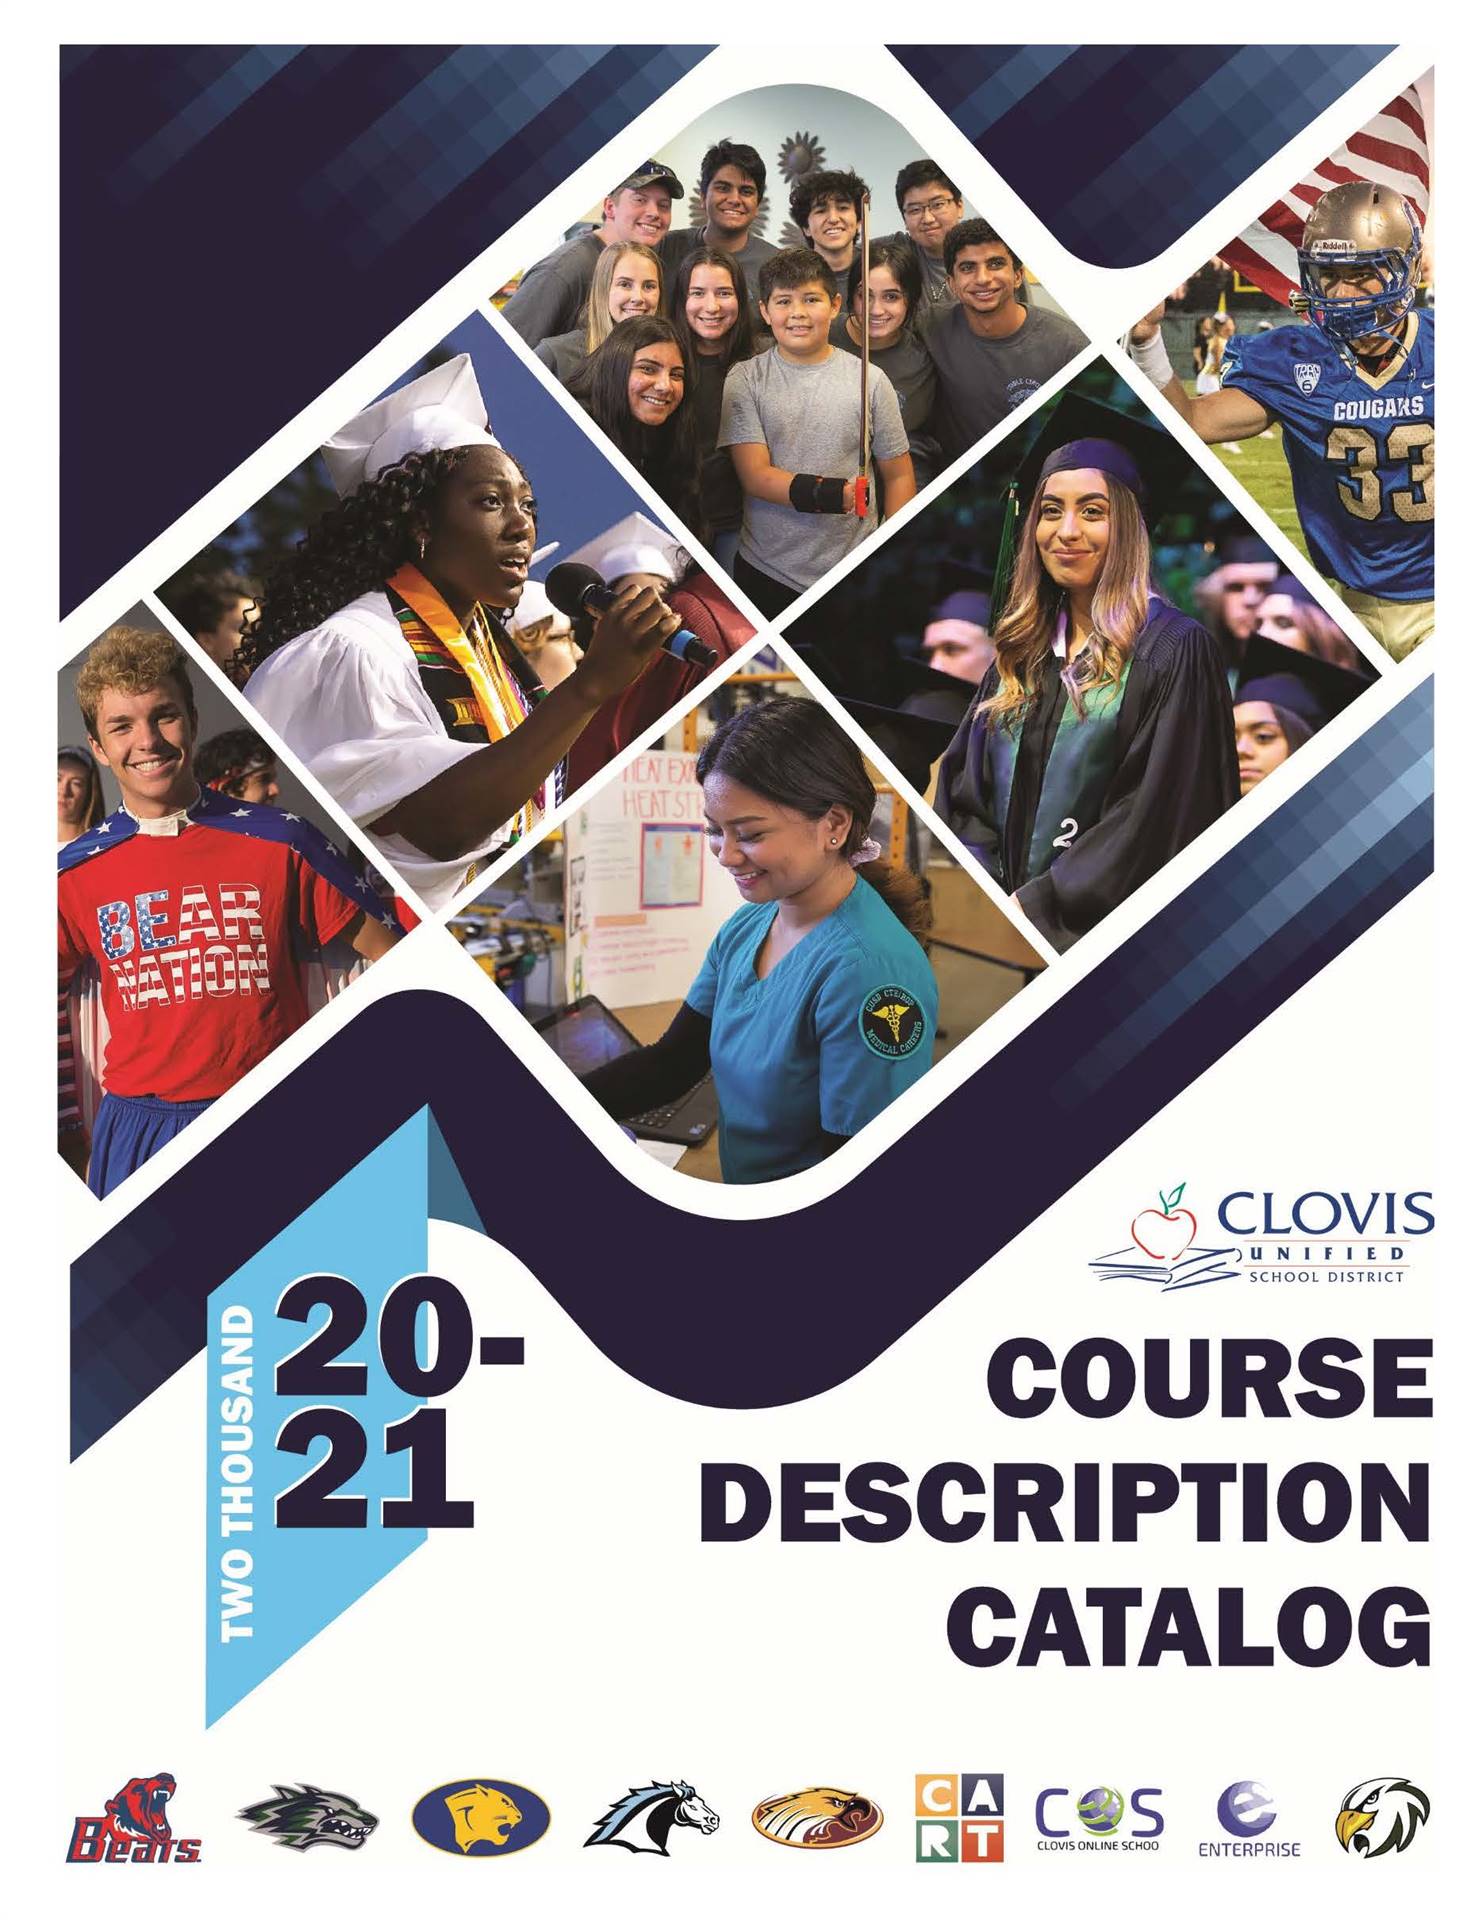 2020-21 Course Description Catalog